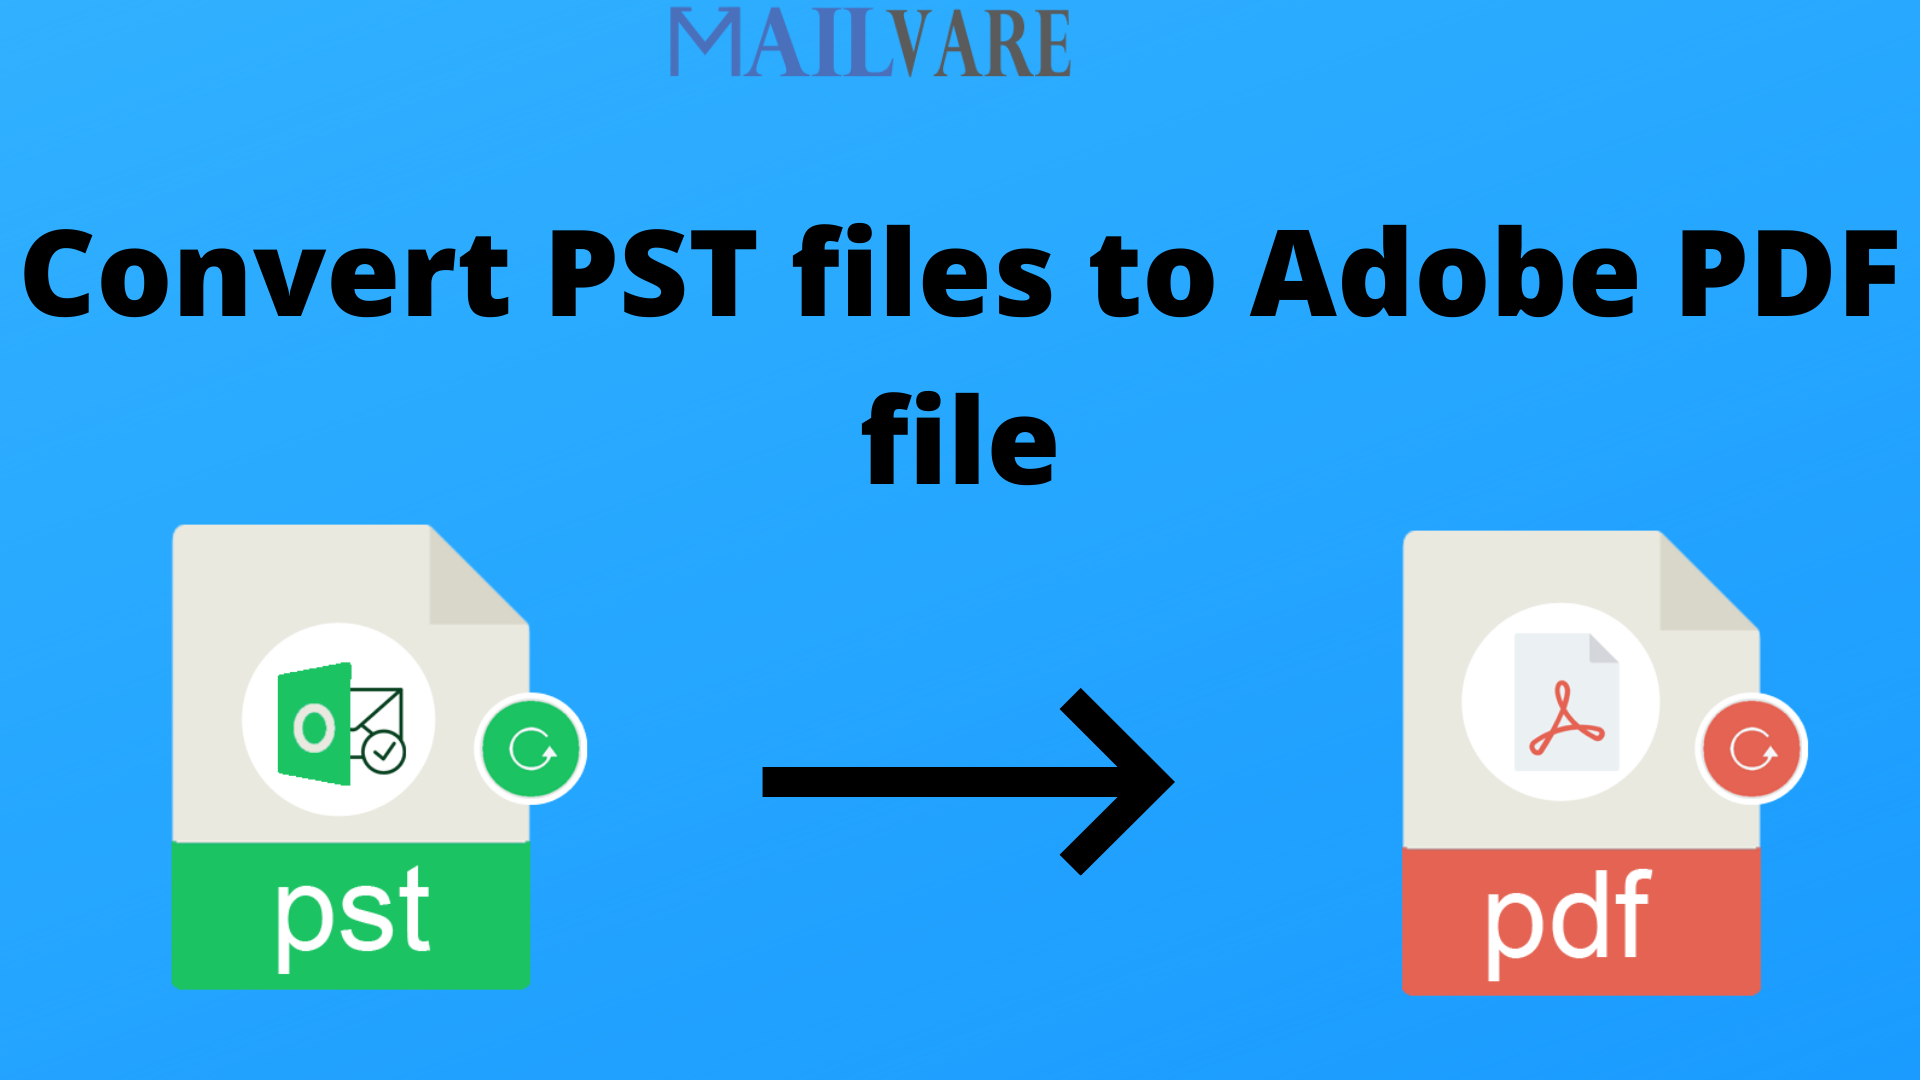 PST files to Adobe PDF file